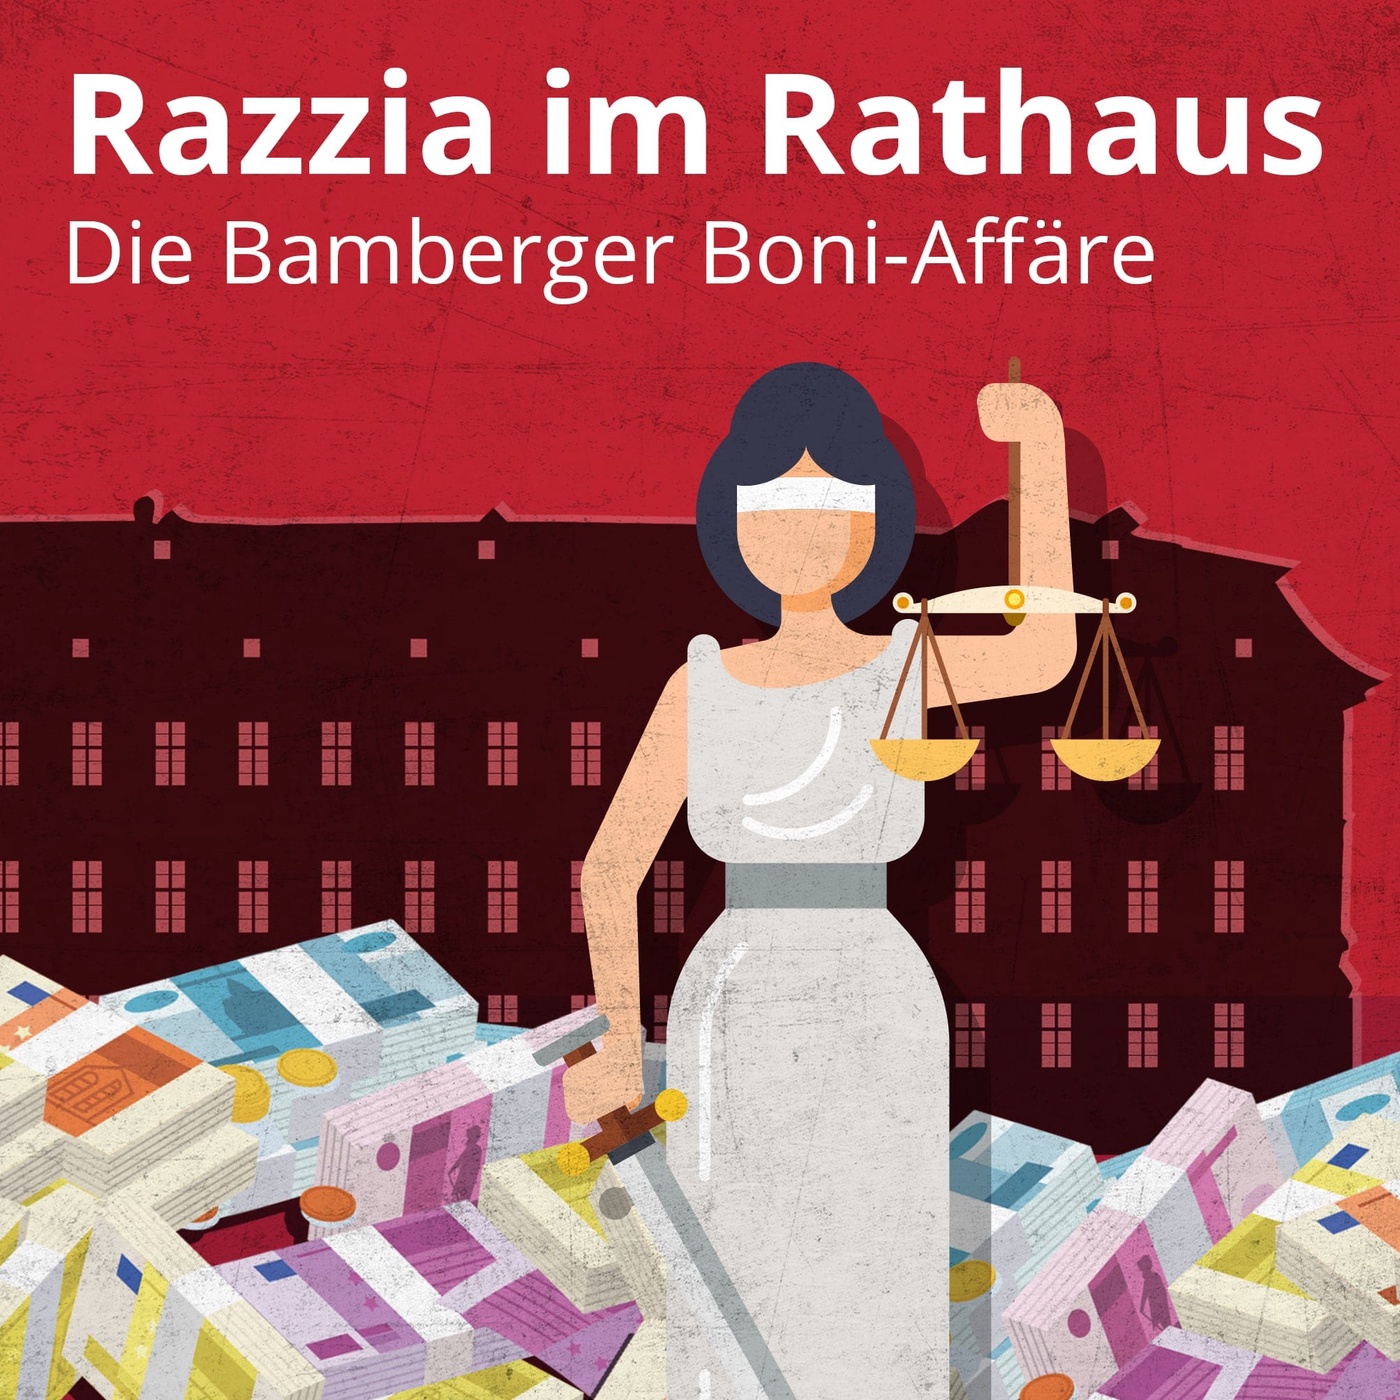 Razzia im Rathaus – Die Bamberger Boni-Affäre